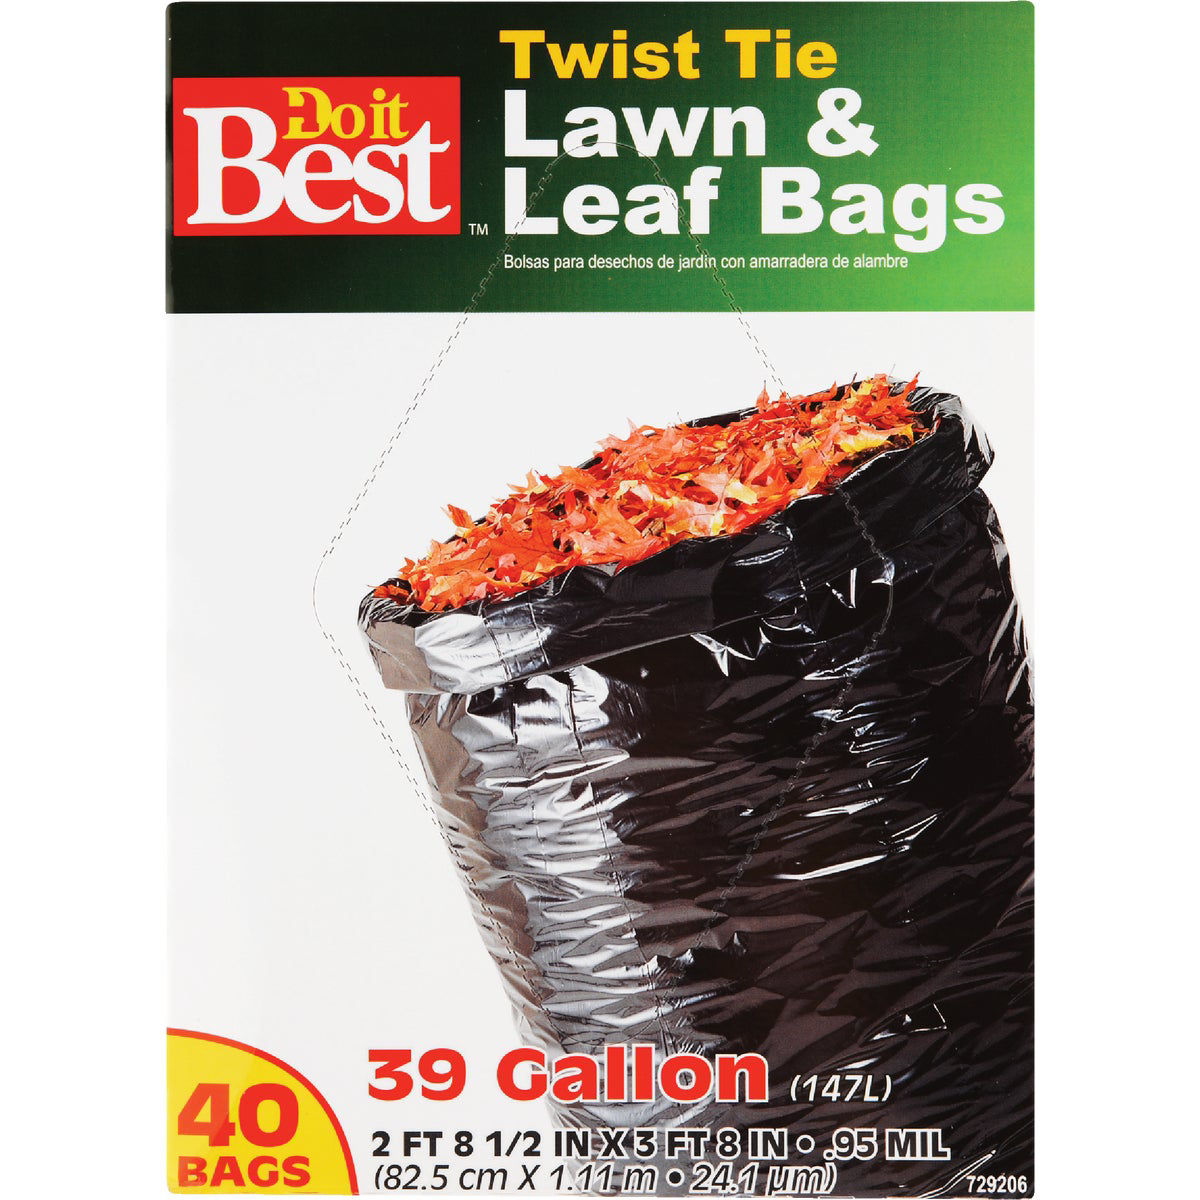 Do it Best 39 Gal. Clear Flap Tie Lawn & Leaf Bag (10-Count